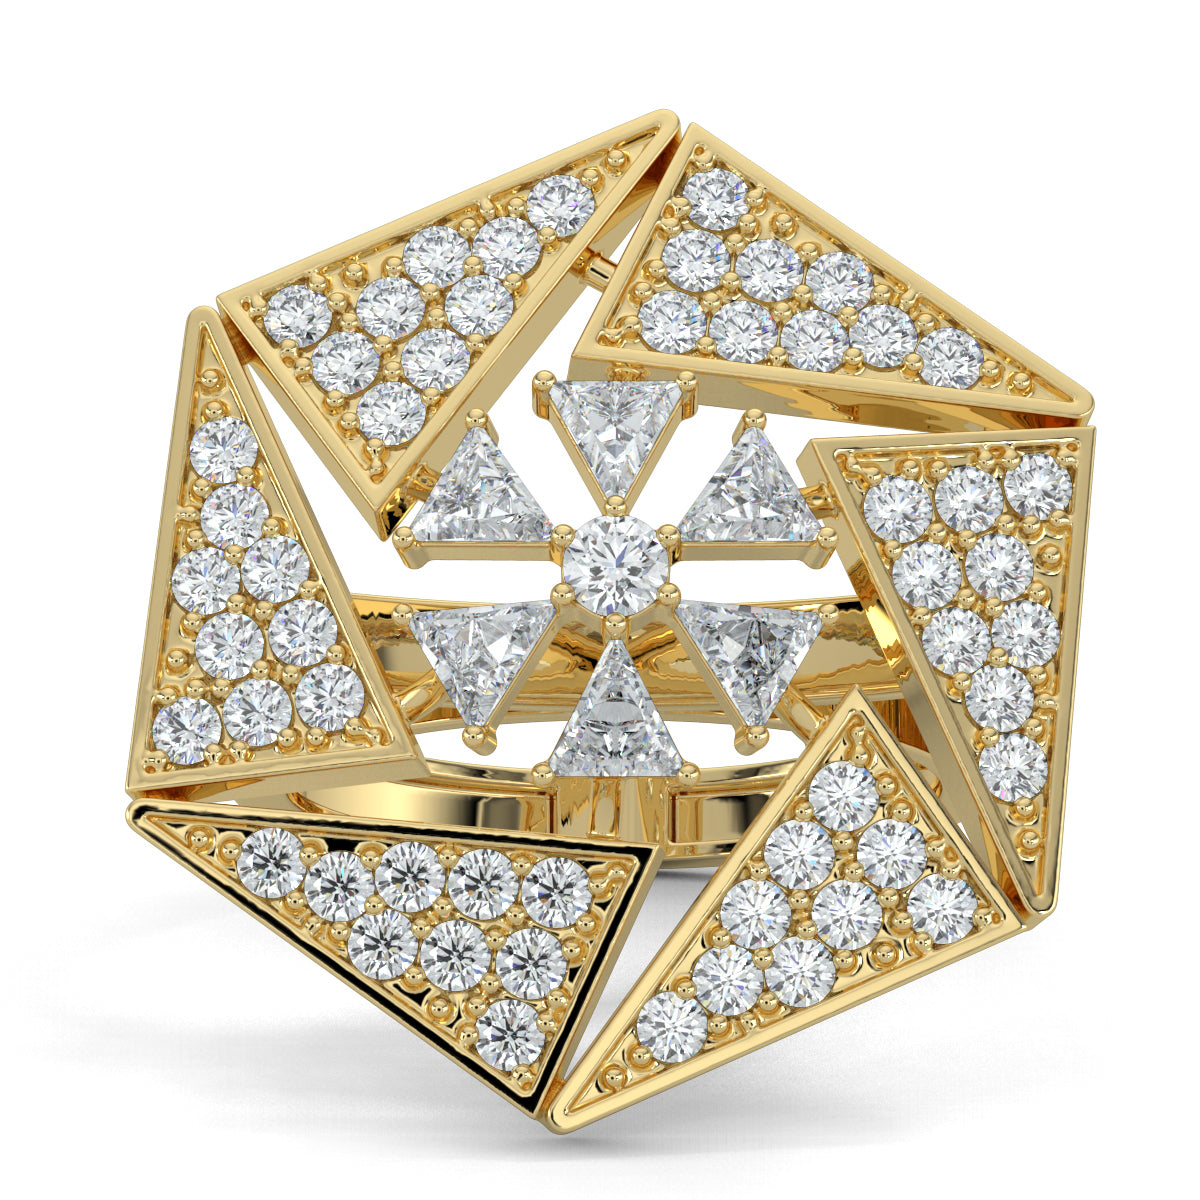 Yellow Gold, Diamond Ring, dazzling trilliant statement ring, natural diamonds, lab-grown diamonds, trilliant diamonds, round diamonds, cocktail ring, statement jewelry, luxury ring, bold sparkle ring